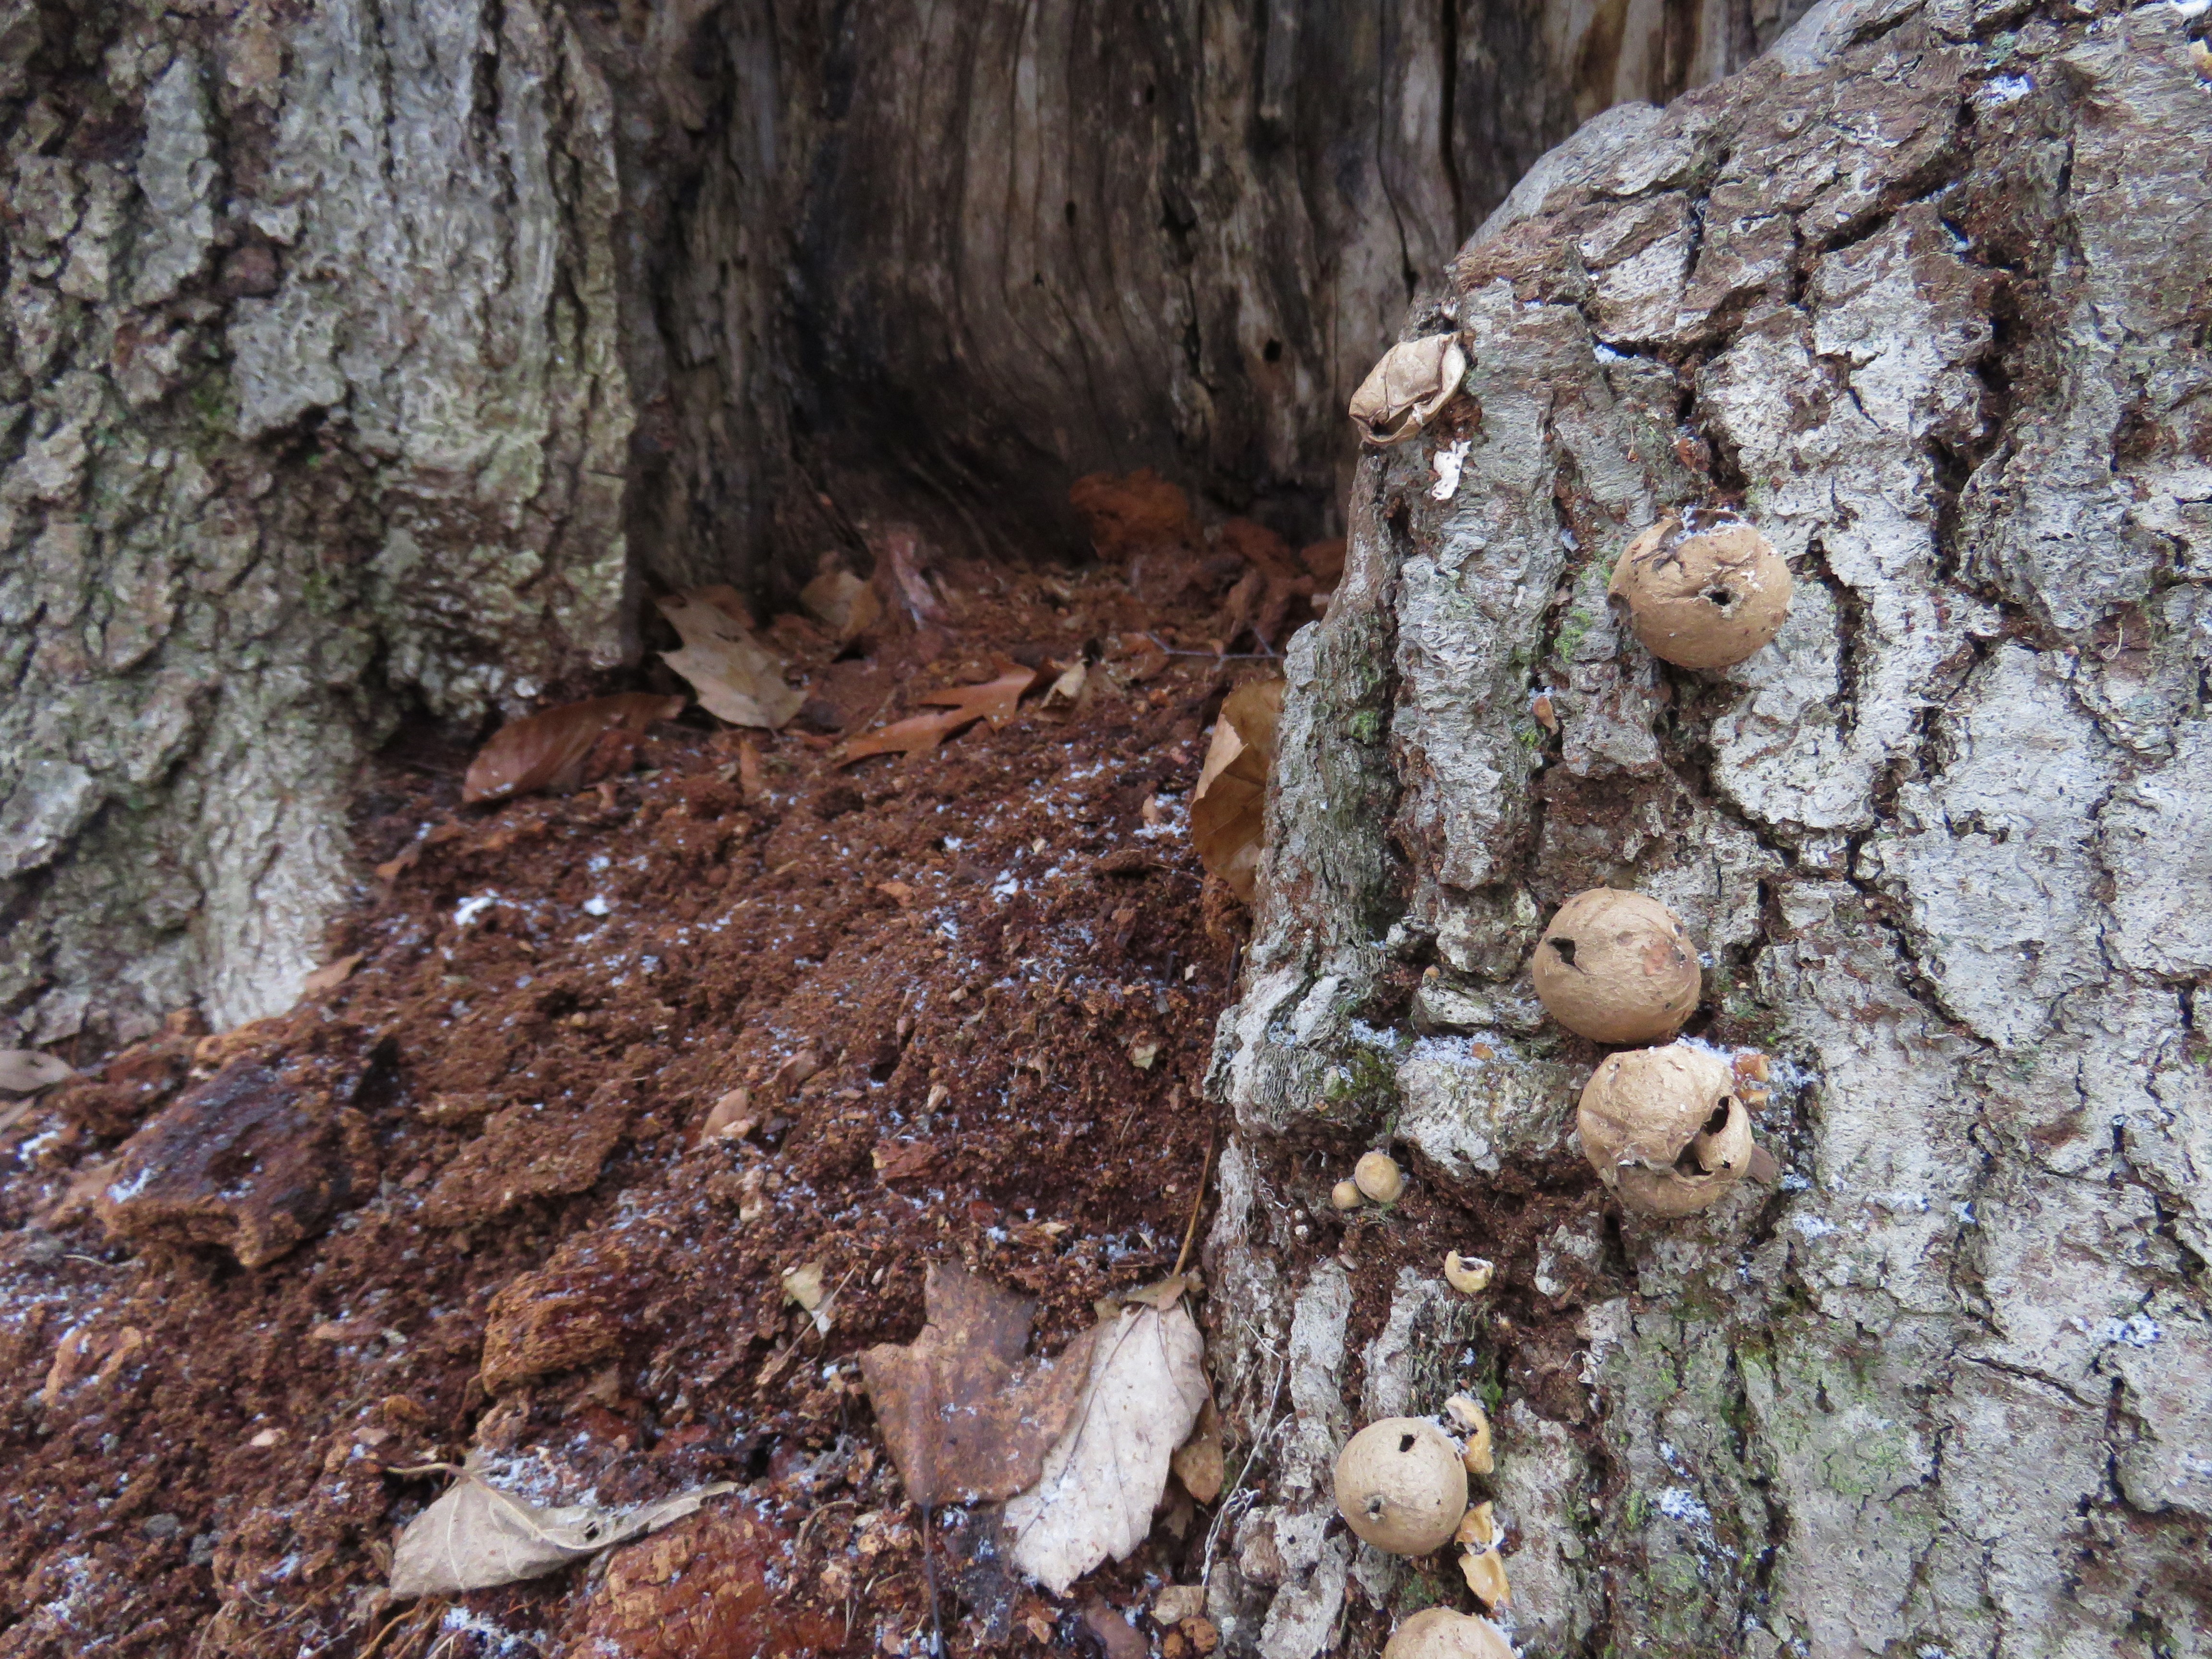 Puffball mushrooms on a tree trunk